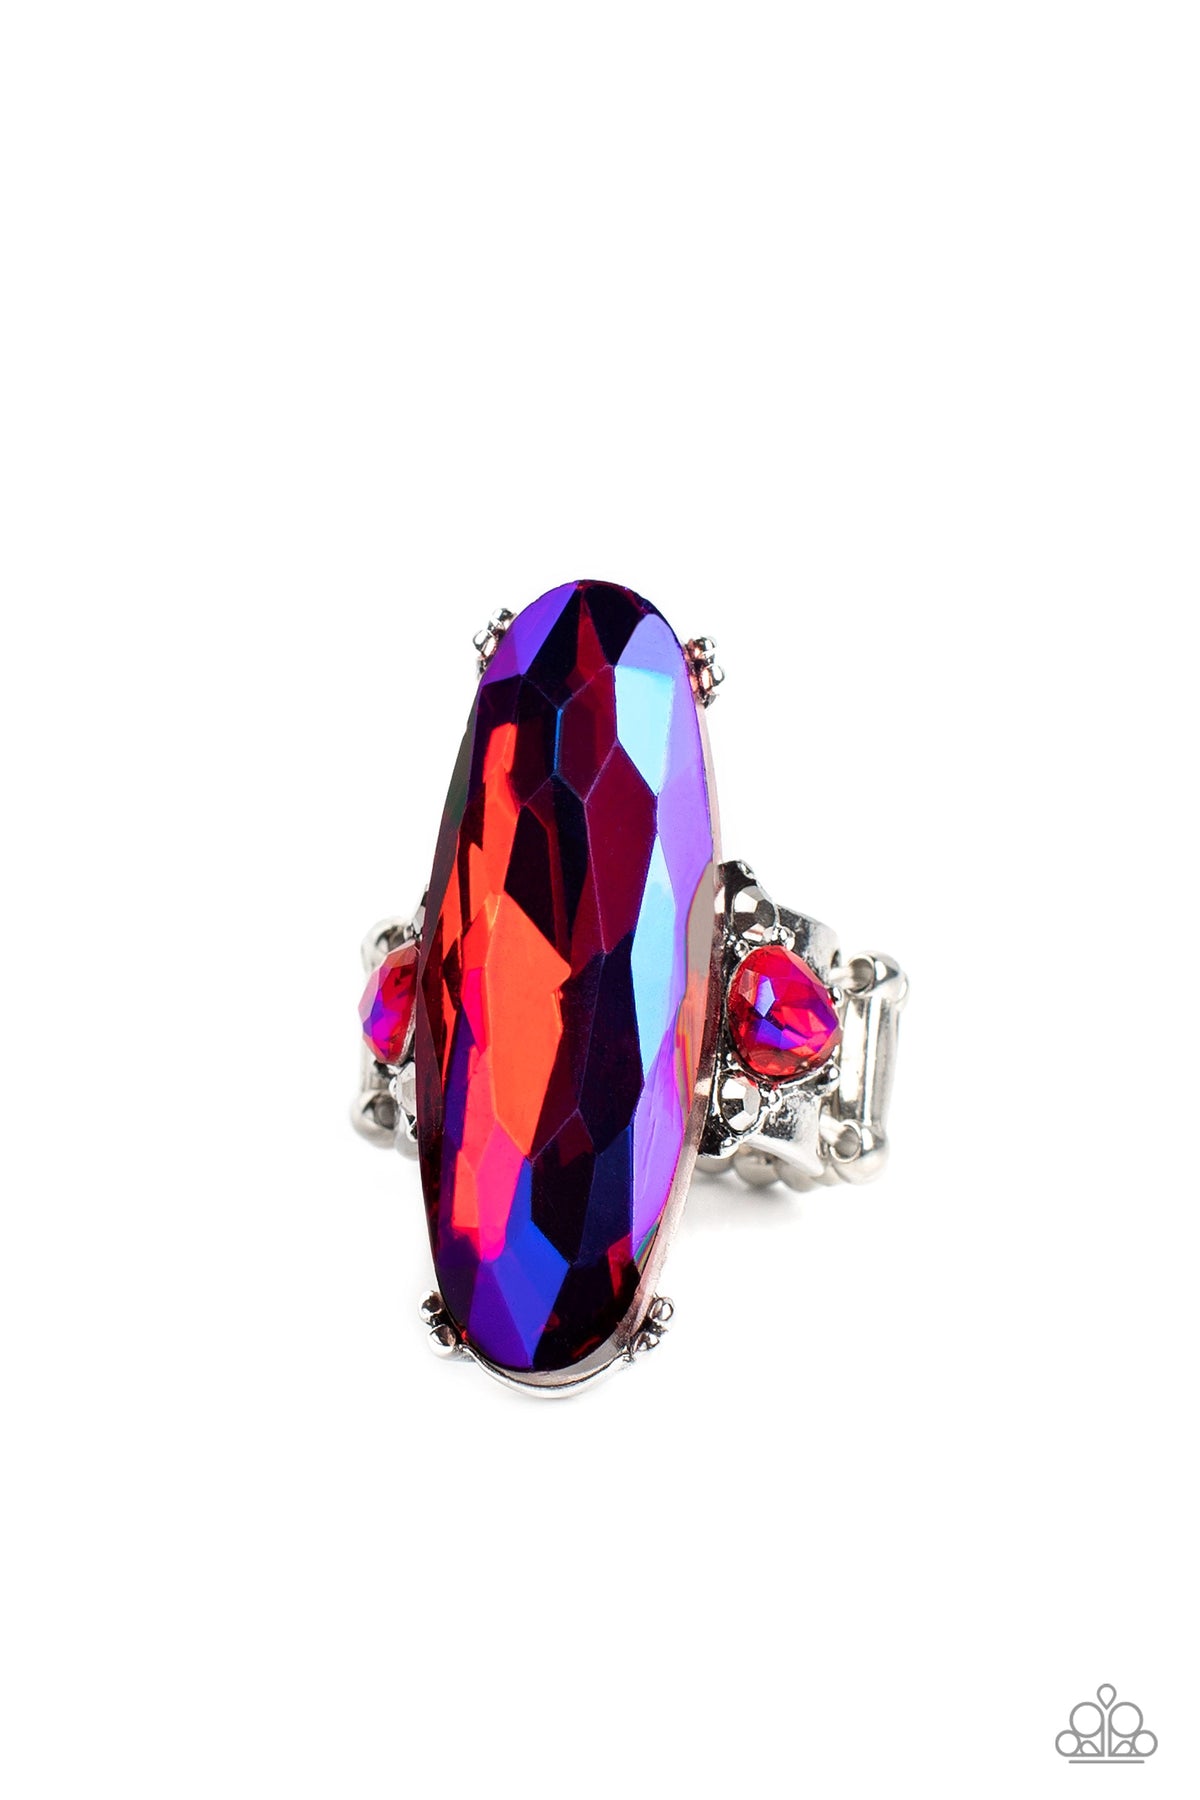 Interdimensional Dimension Pink Rhinestone Ring - Paparazzi Accessories- lightbox - CarasShop.com - $5 Jewelry by Cara Jewels